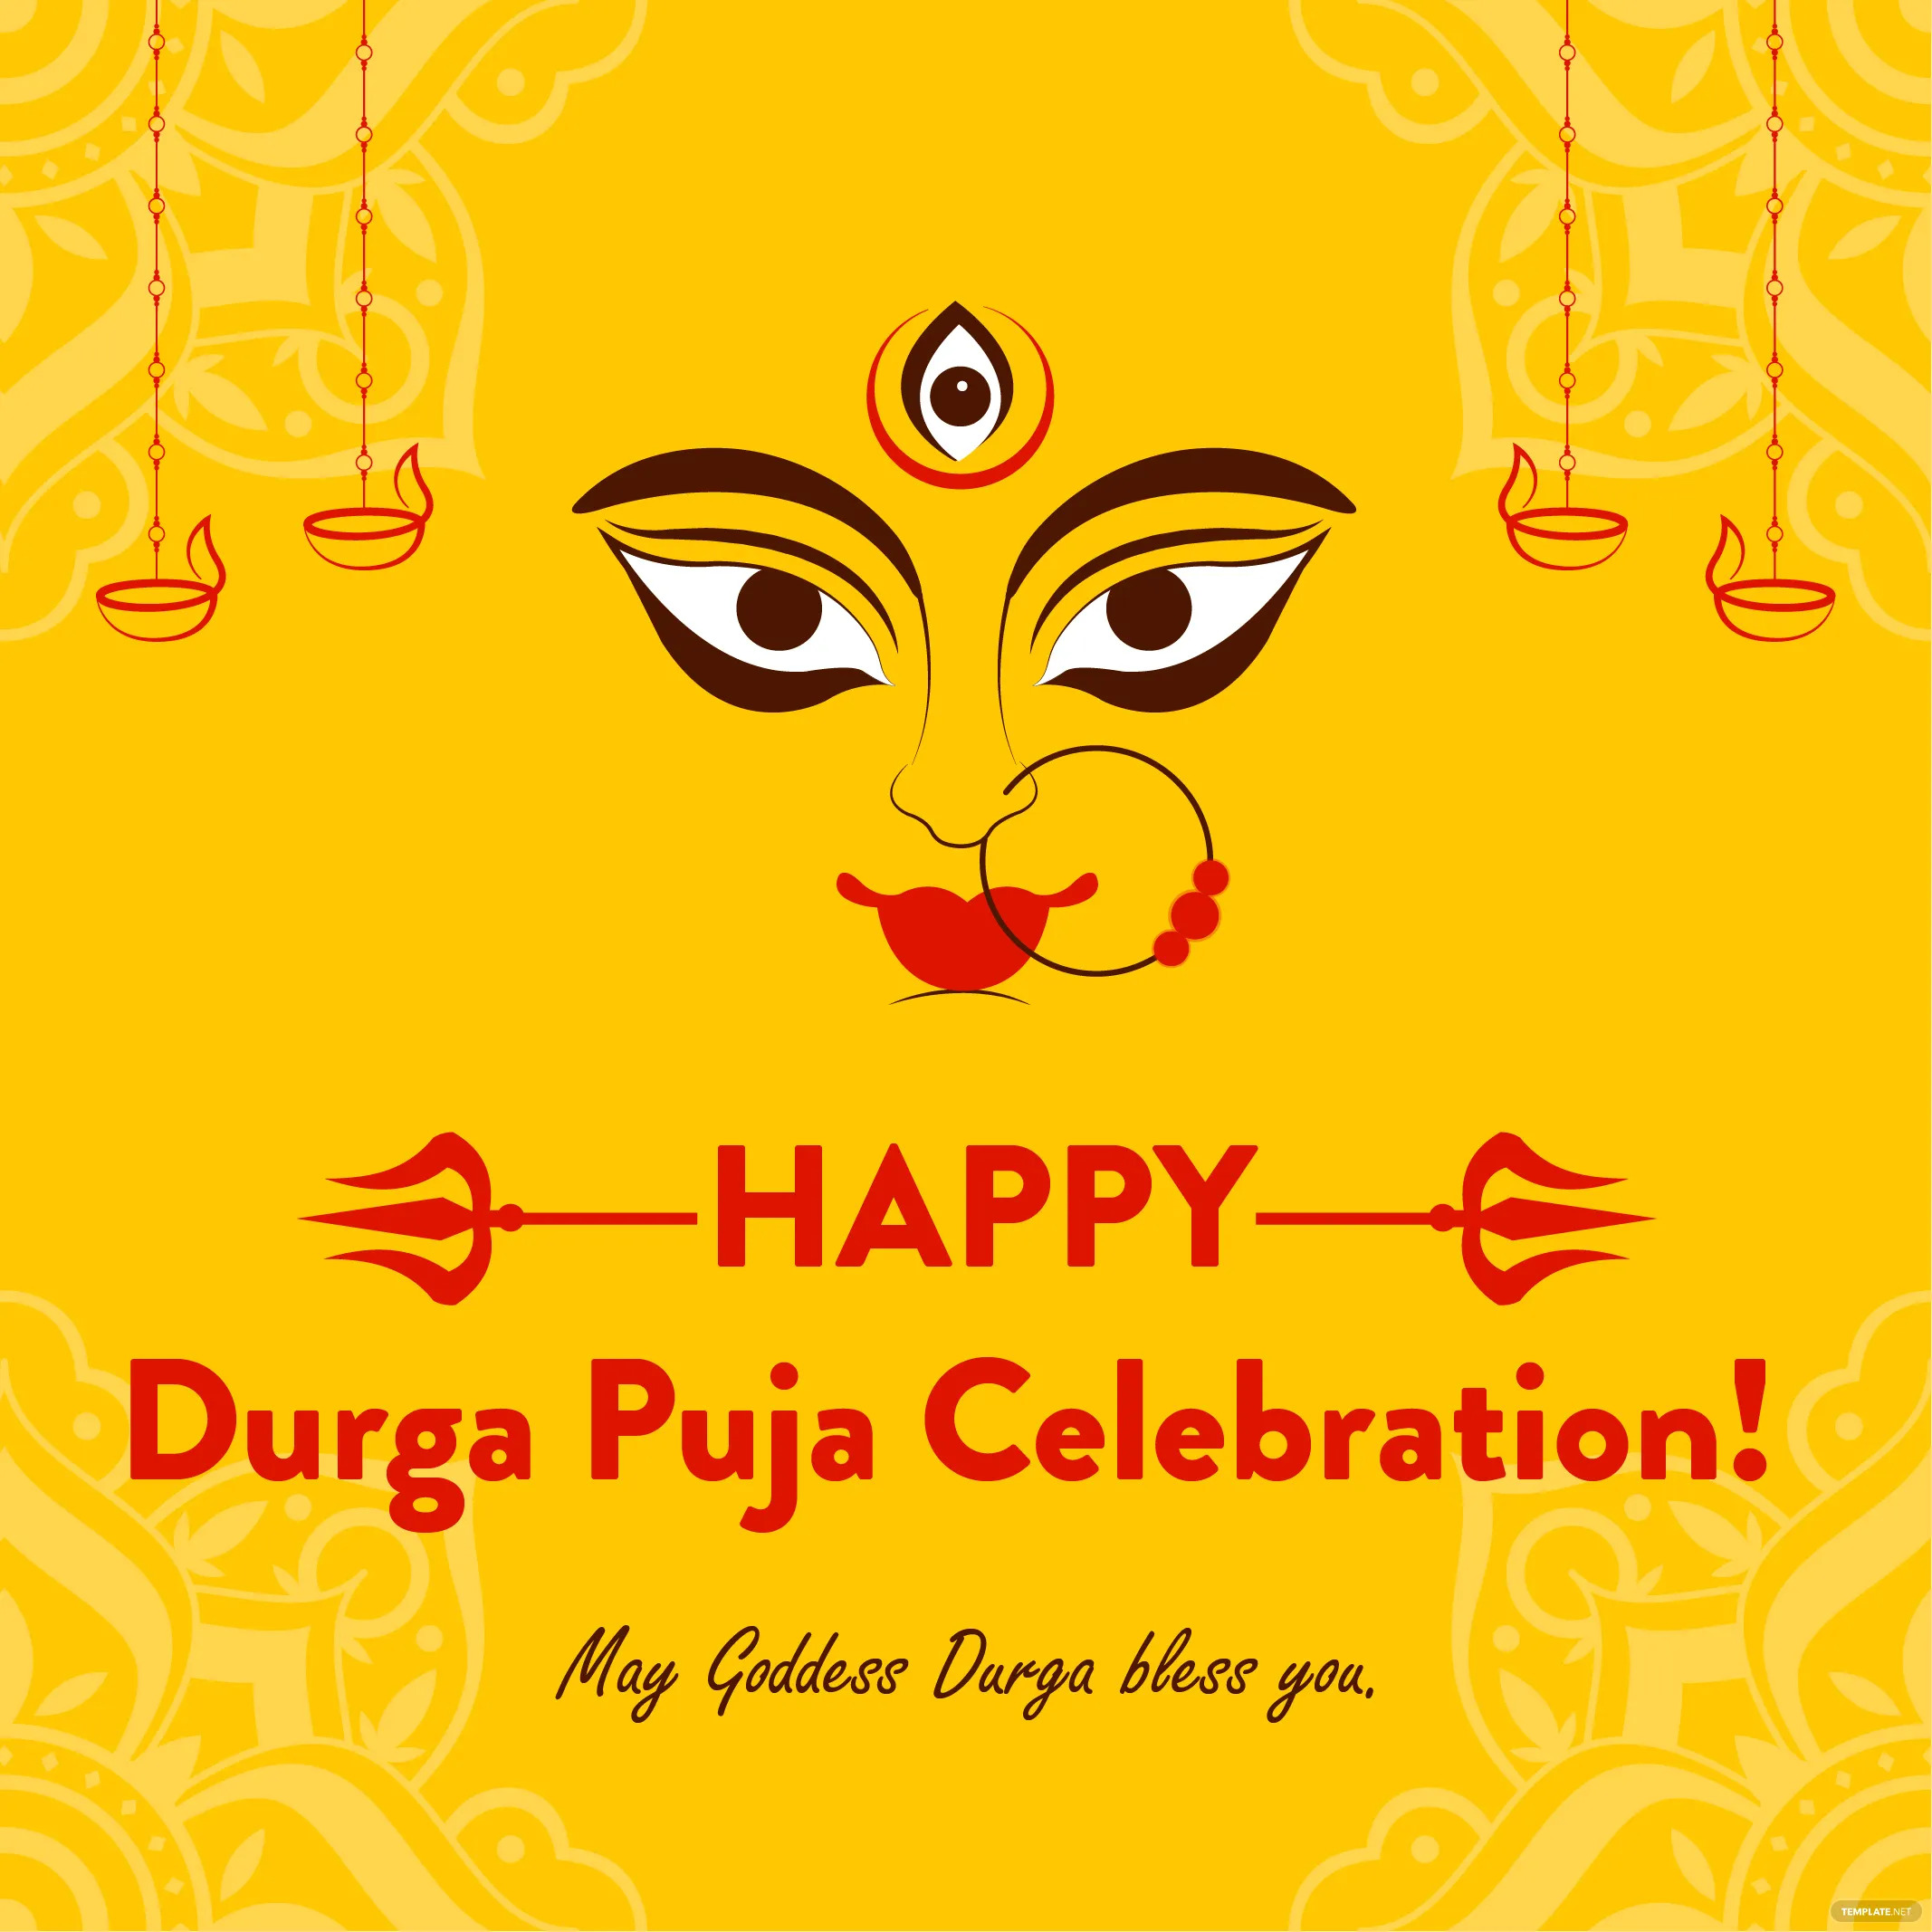 durga puja celebration greeting card ideas examples